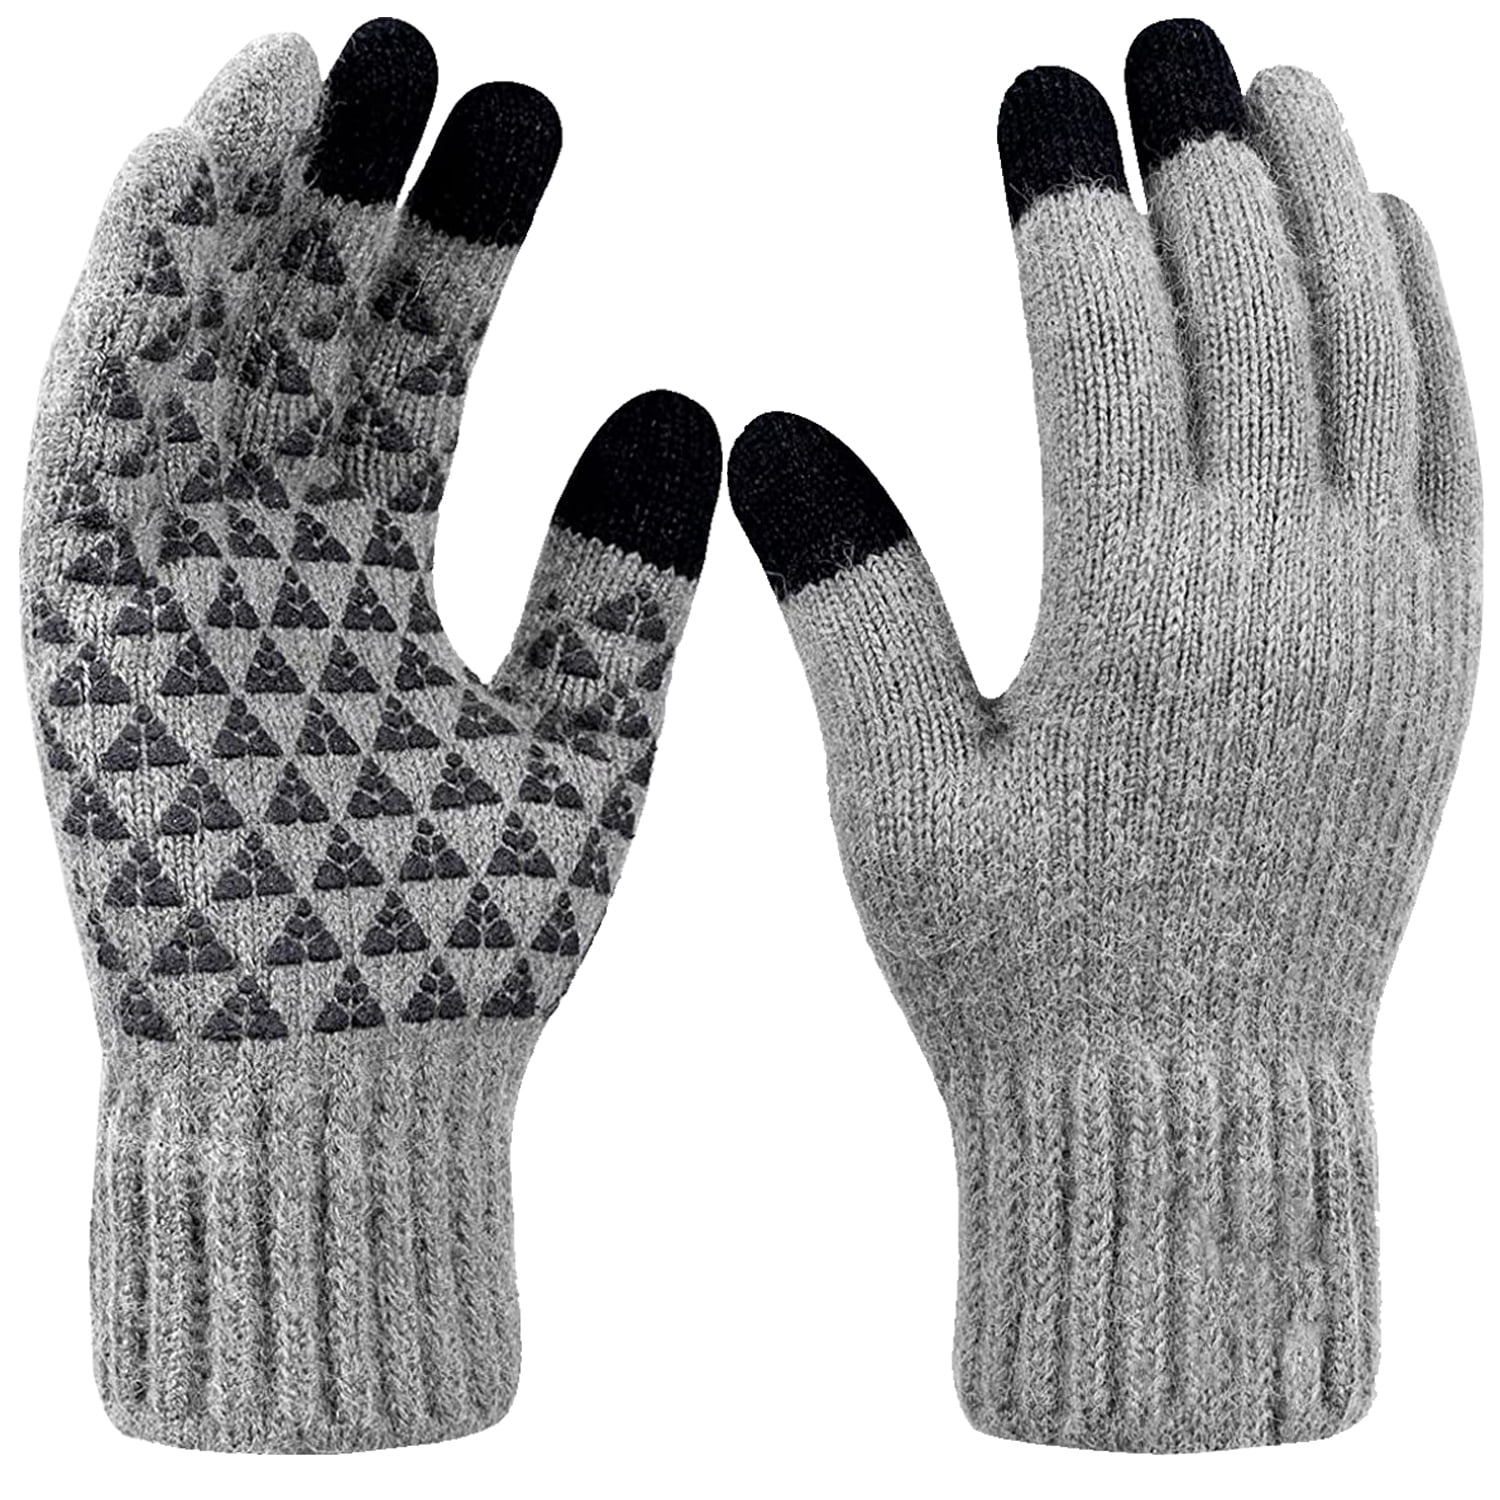 Winter Warm Touchscreen Gloves for Men and Women Touch Screen Fleece Lined Knit Anti-Slip Wool Glove 